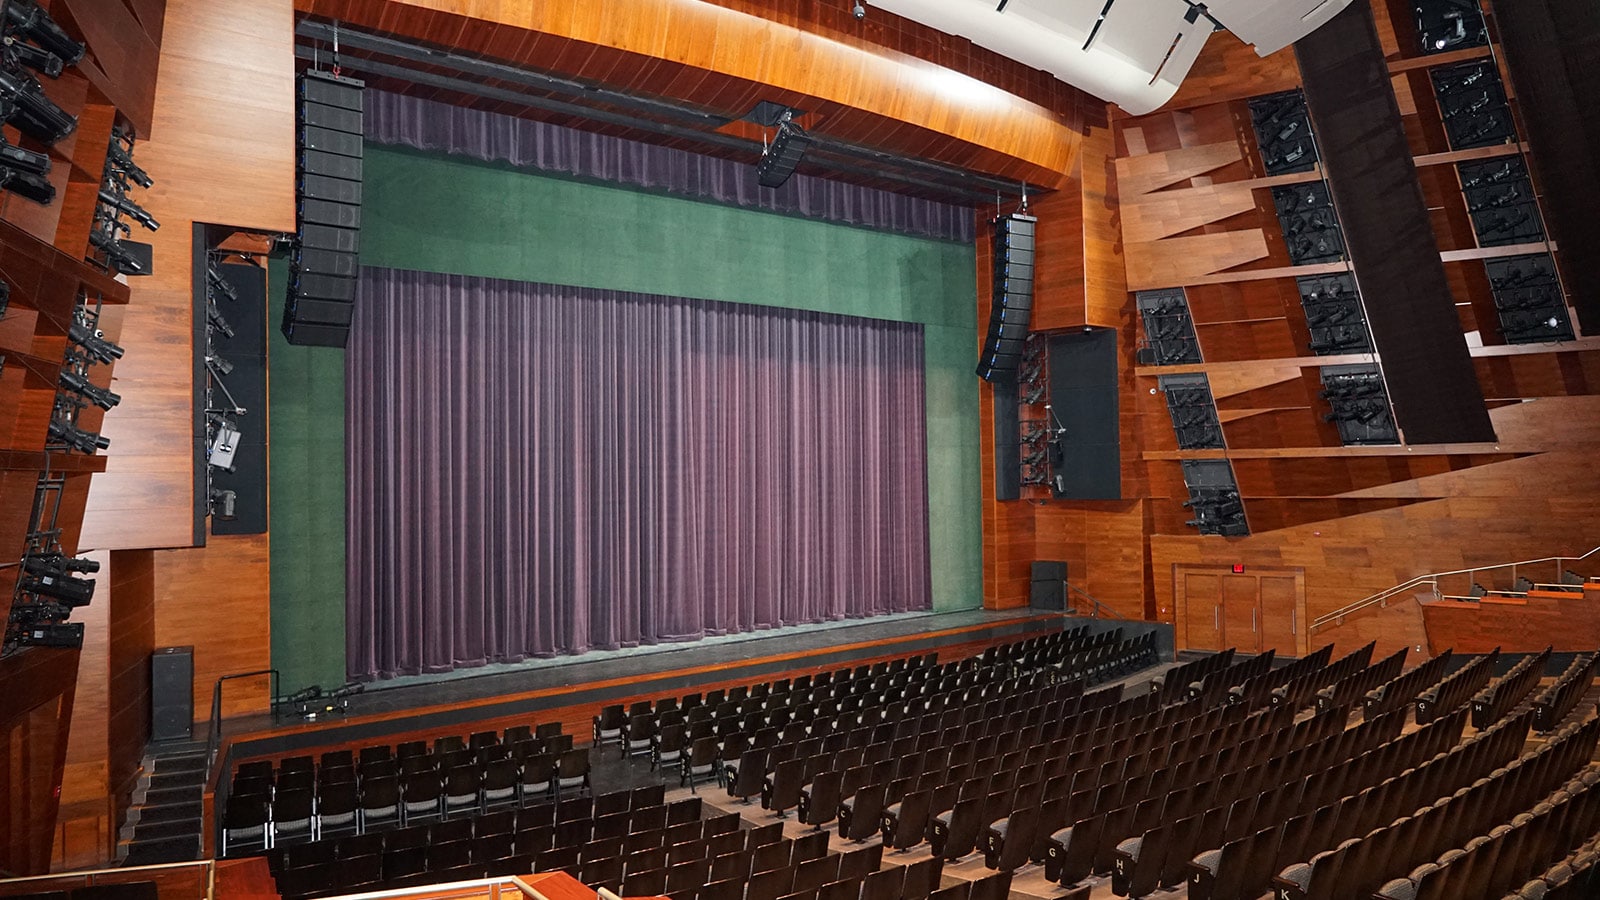  Southern Alberta Jubilee Auditorium (SAJA) – Calgary, Canada